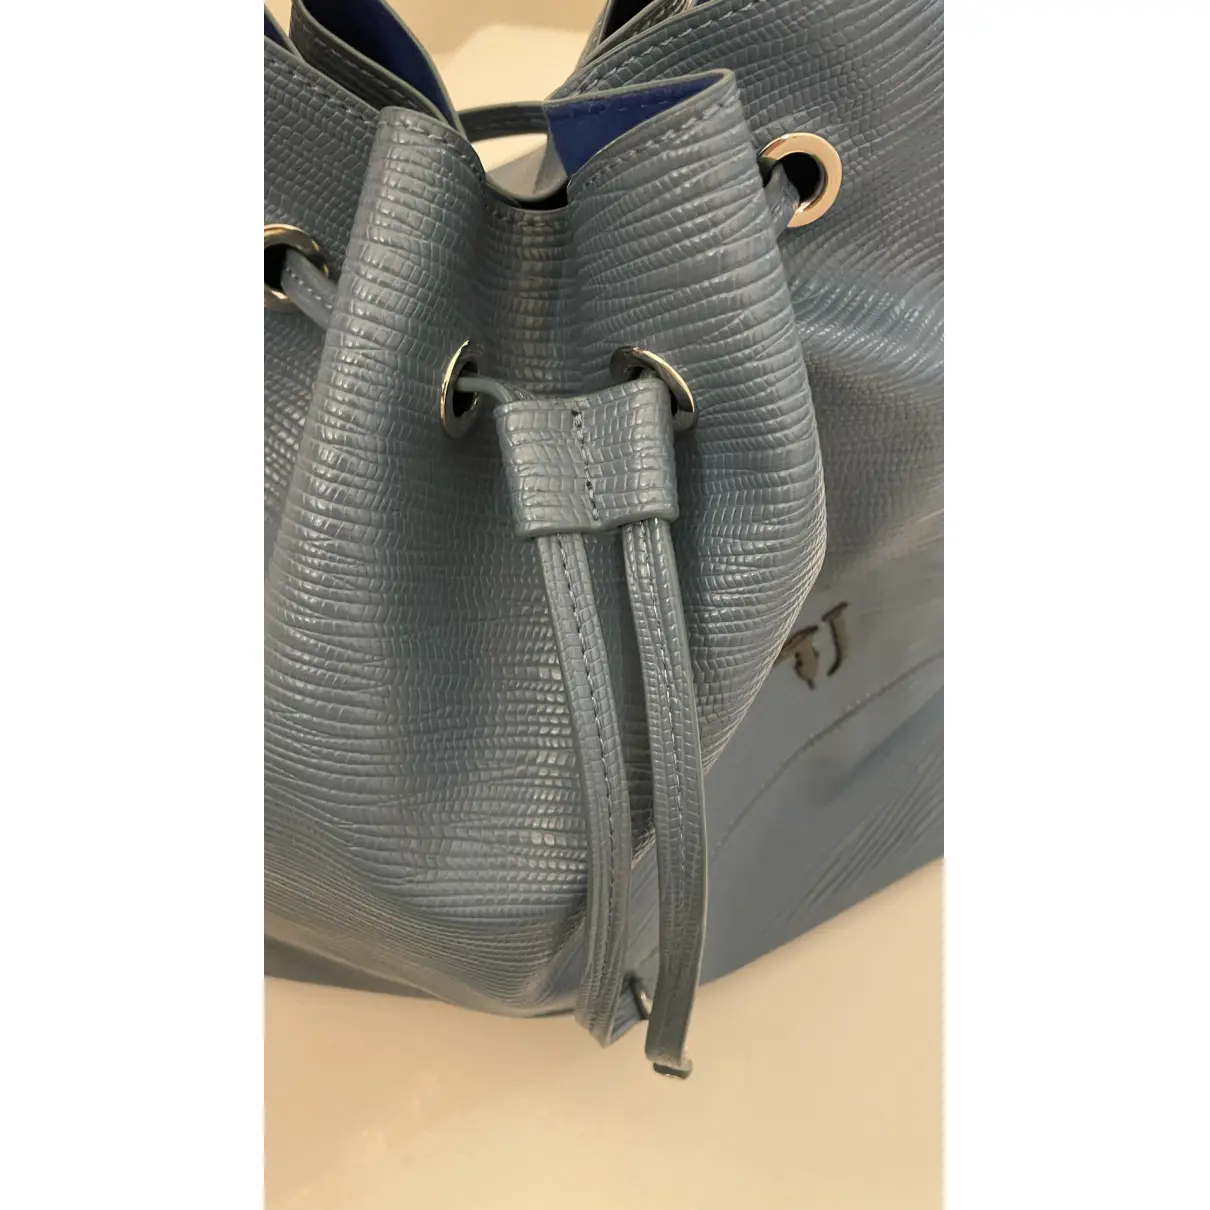 Patent leather handbag Trussardi Jeans